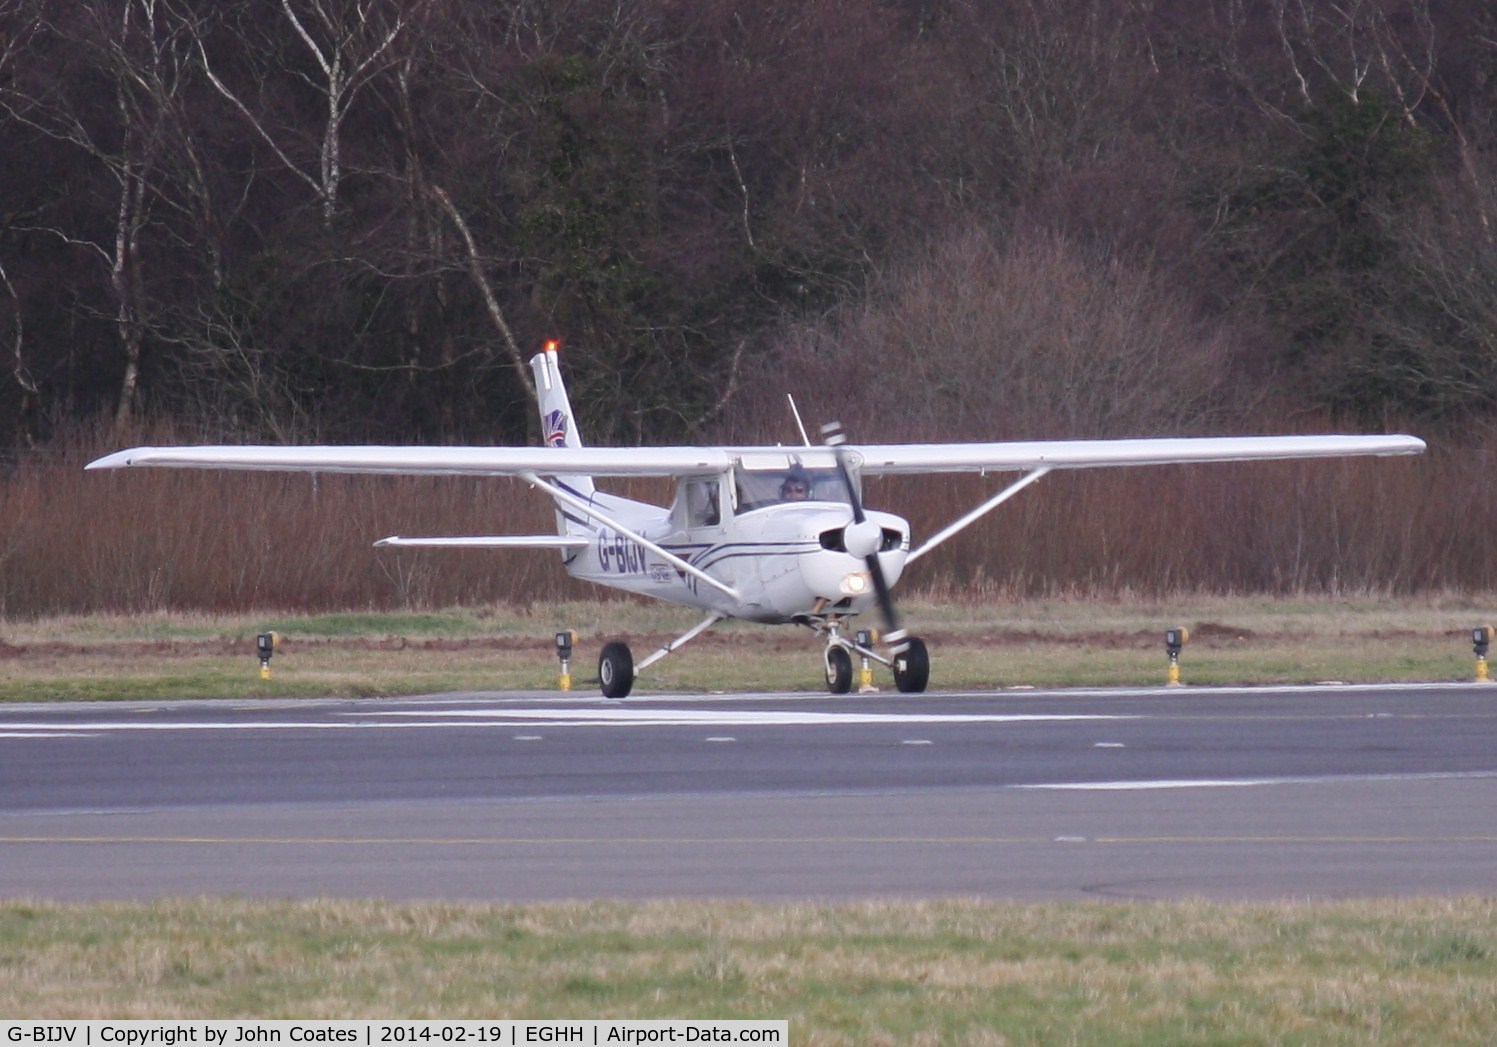 G-BIJV, 1981 Reims F152 C/N 1813, Taxiing to depart